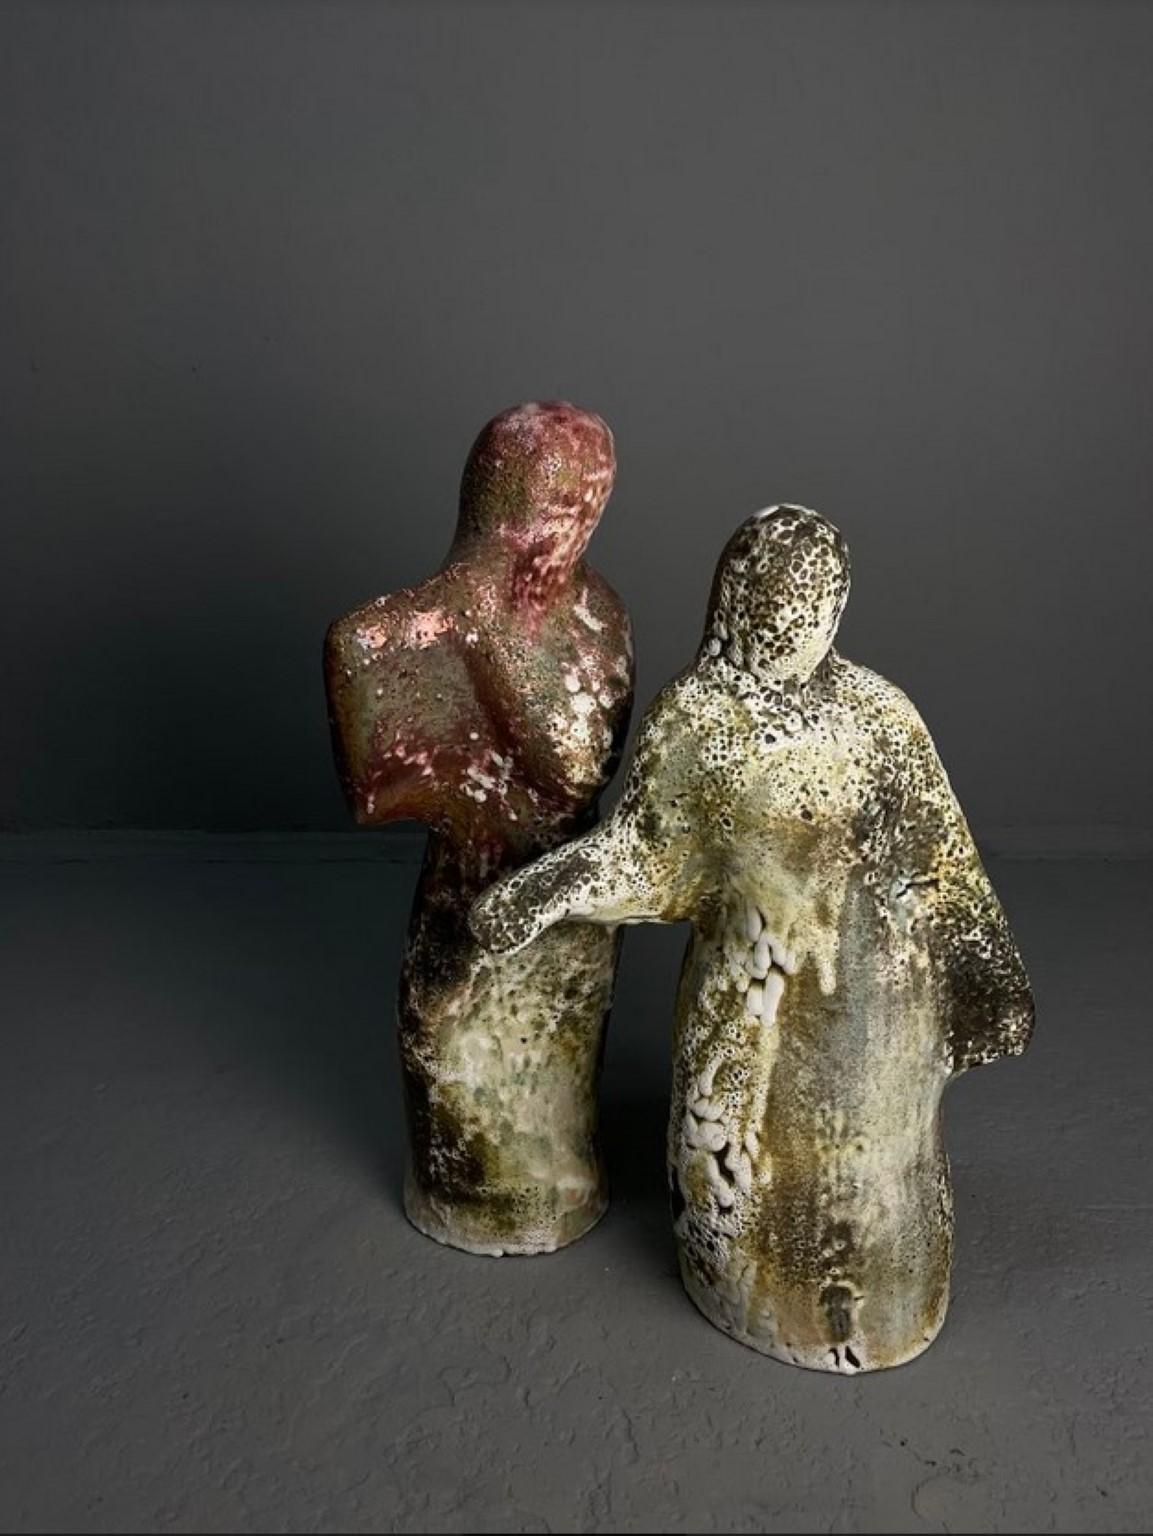 Tanok Diptych sculpture by Gorn Ceramics
Dimensions: 
Height (1): 87
Height (2): 79
Materials: ceramic.

